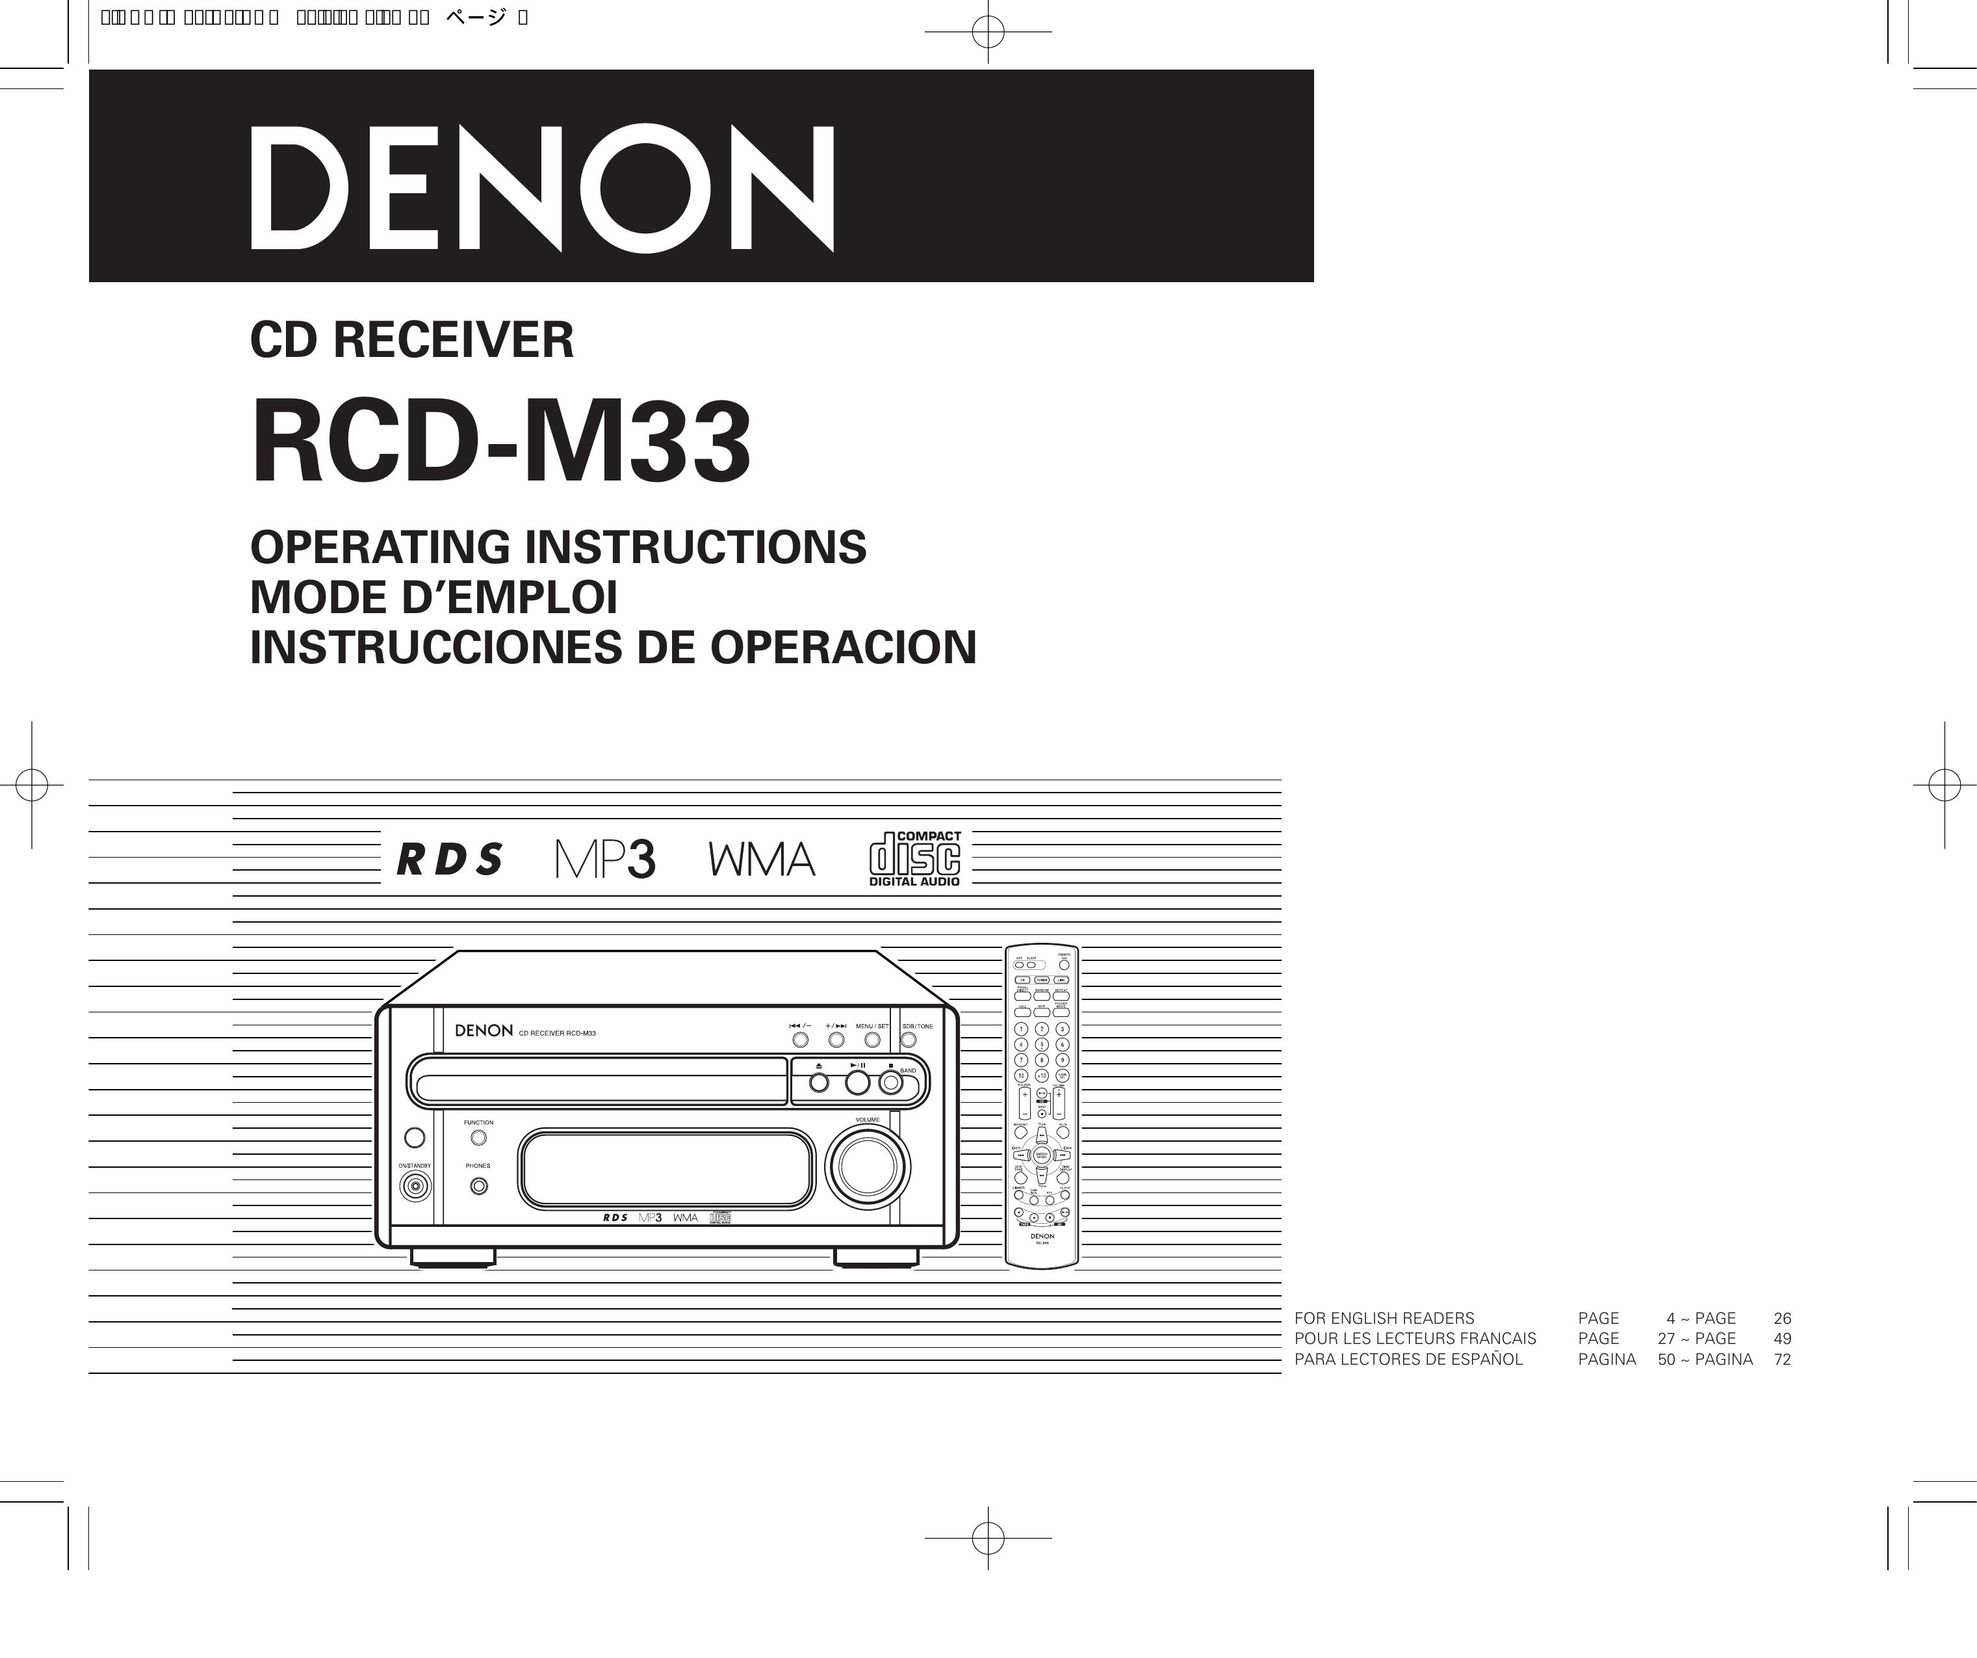 Denon RCD-M33 CD Player User Manual